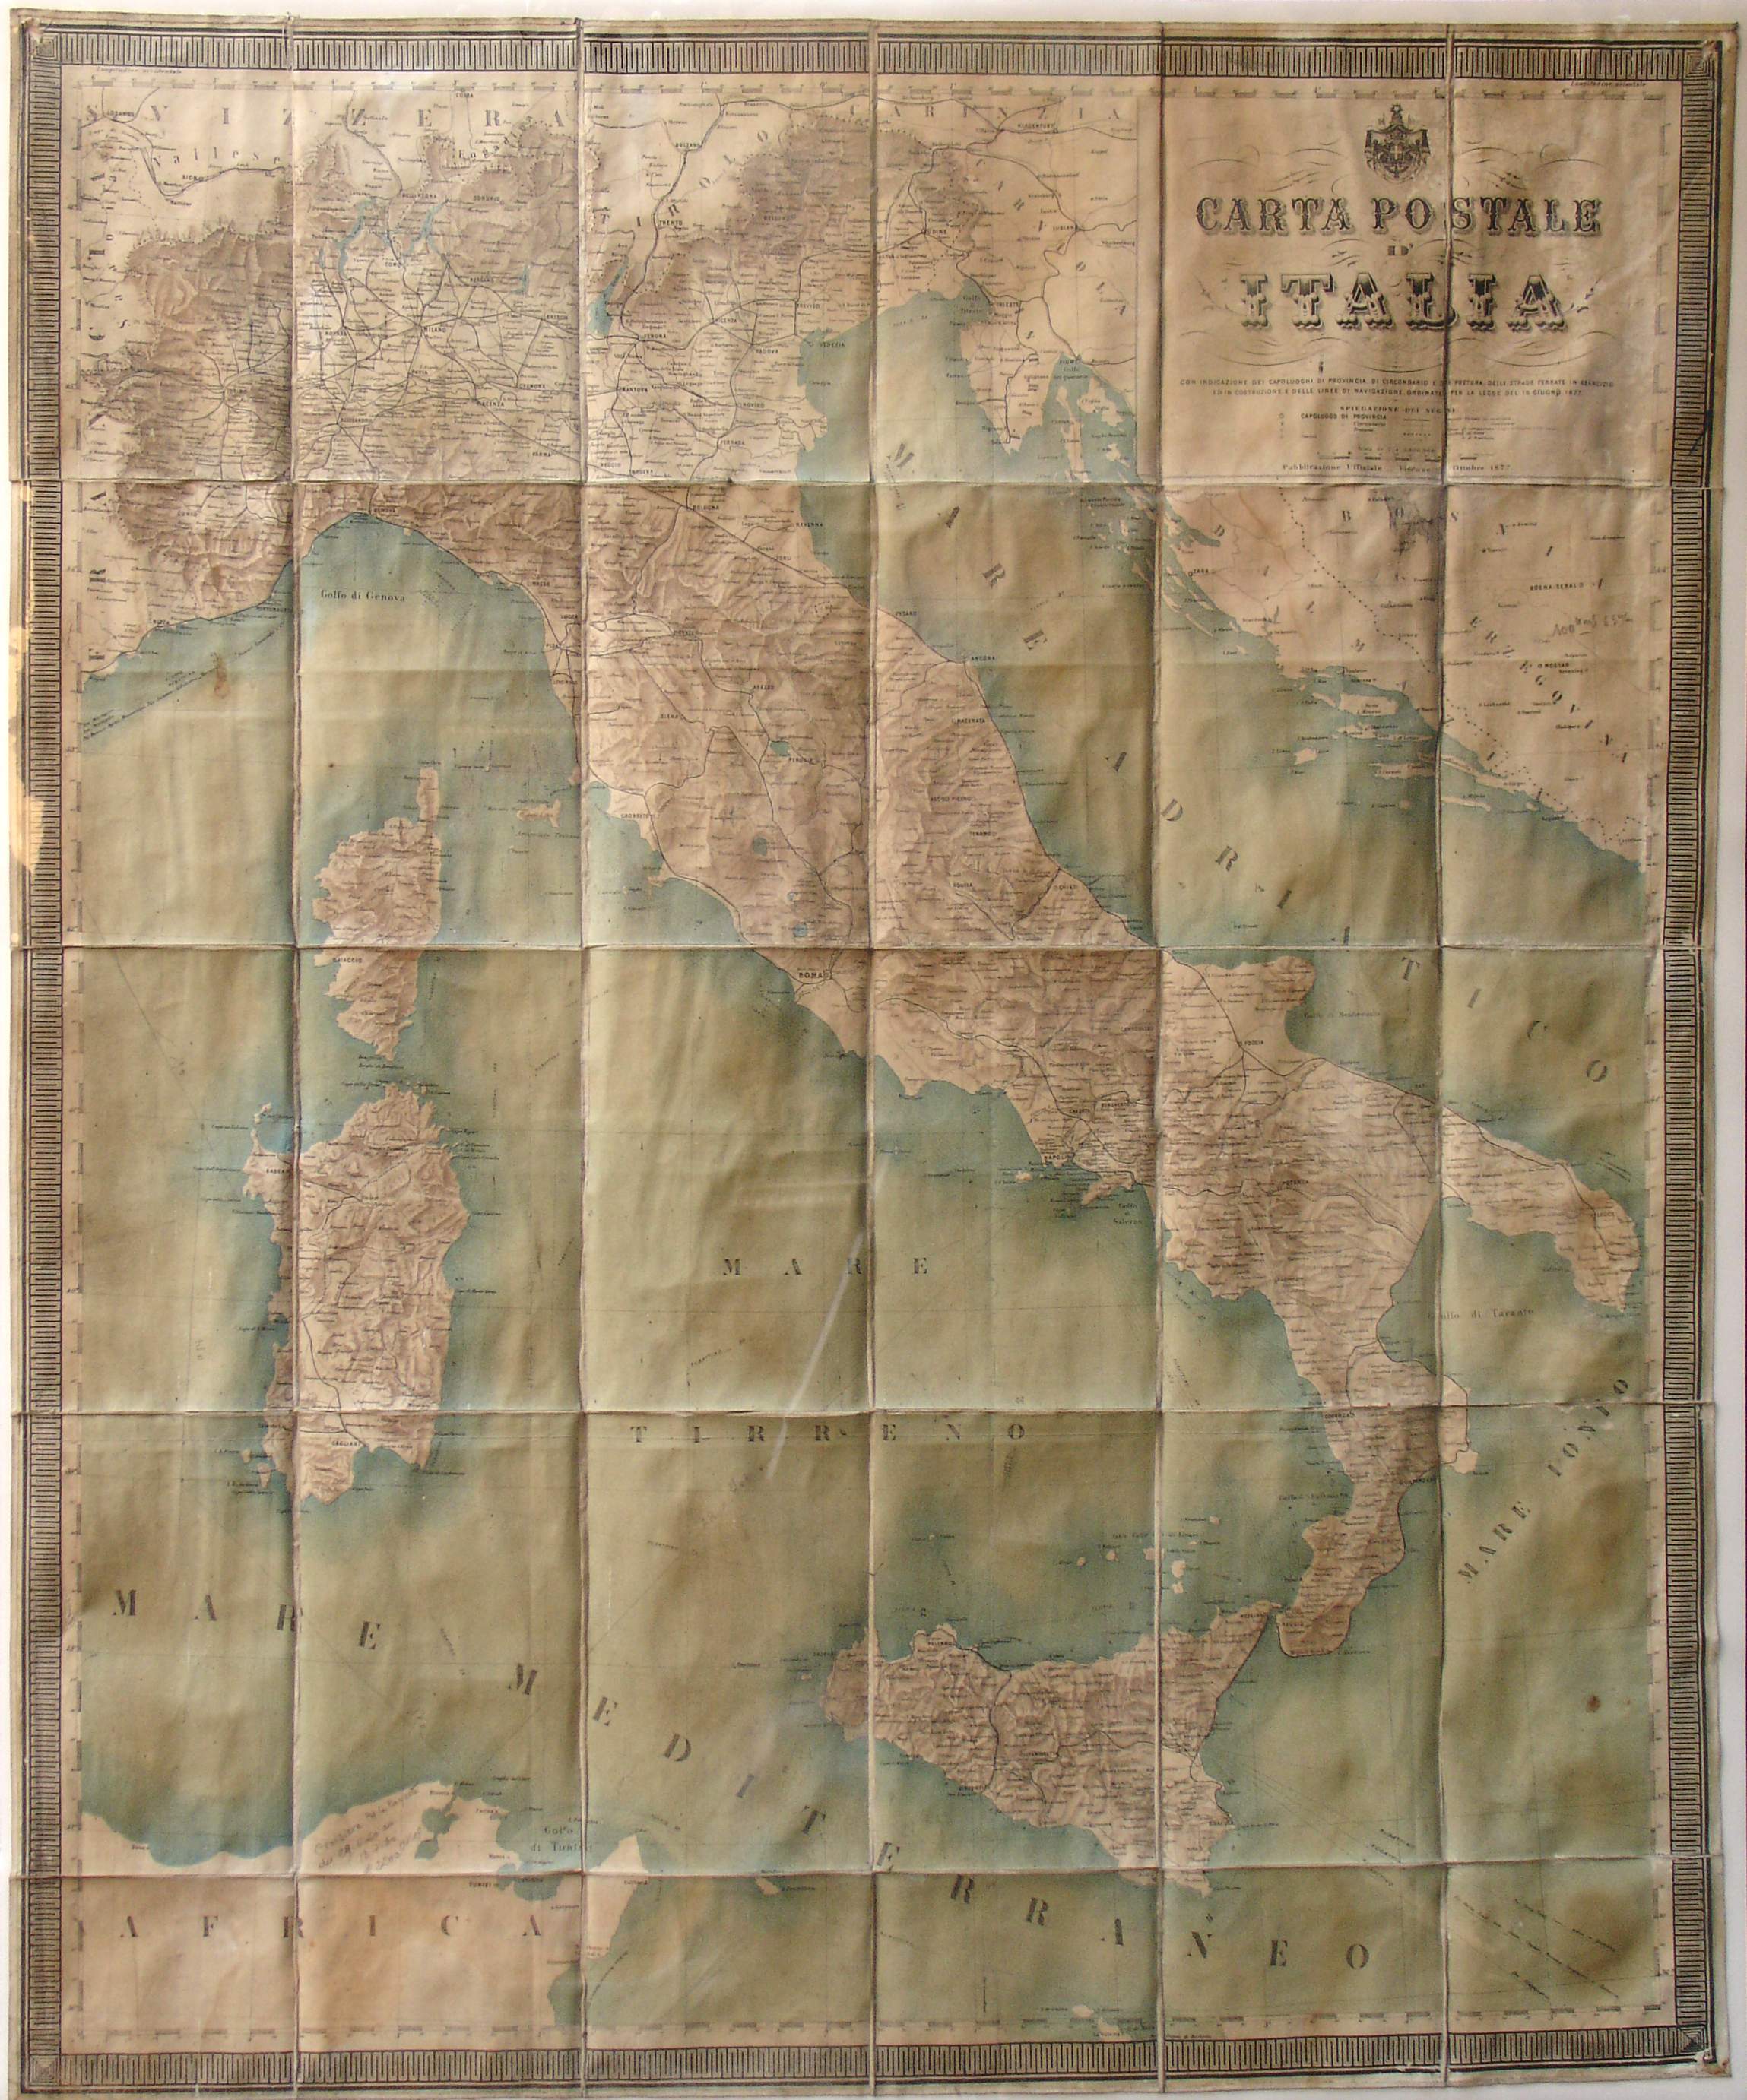 (Italy) Carta Postale D' Italia